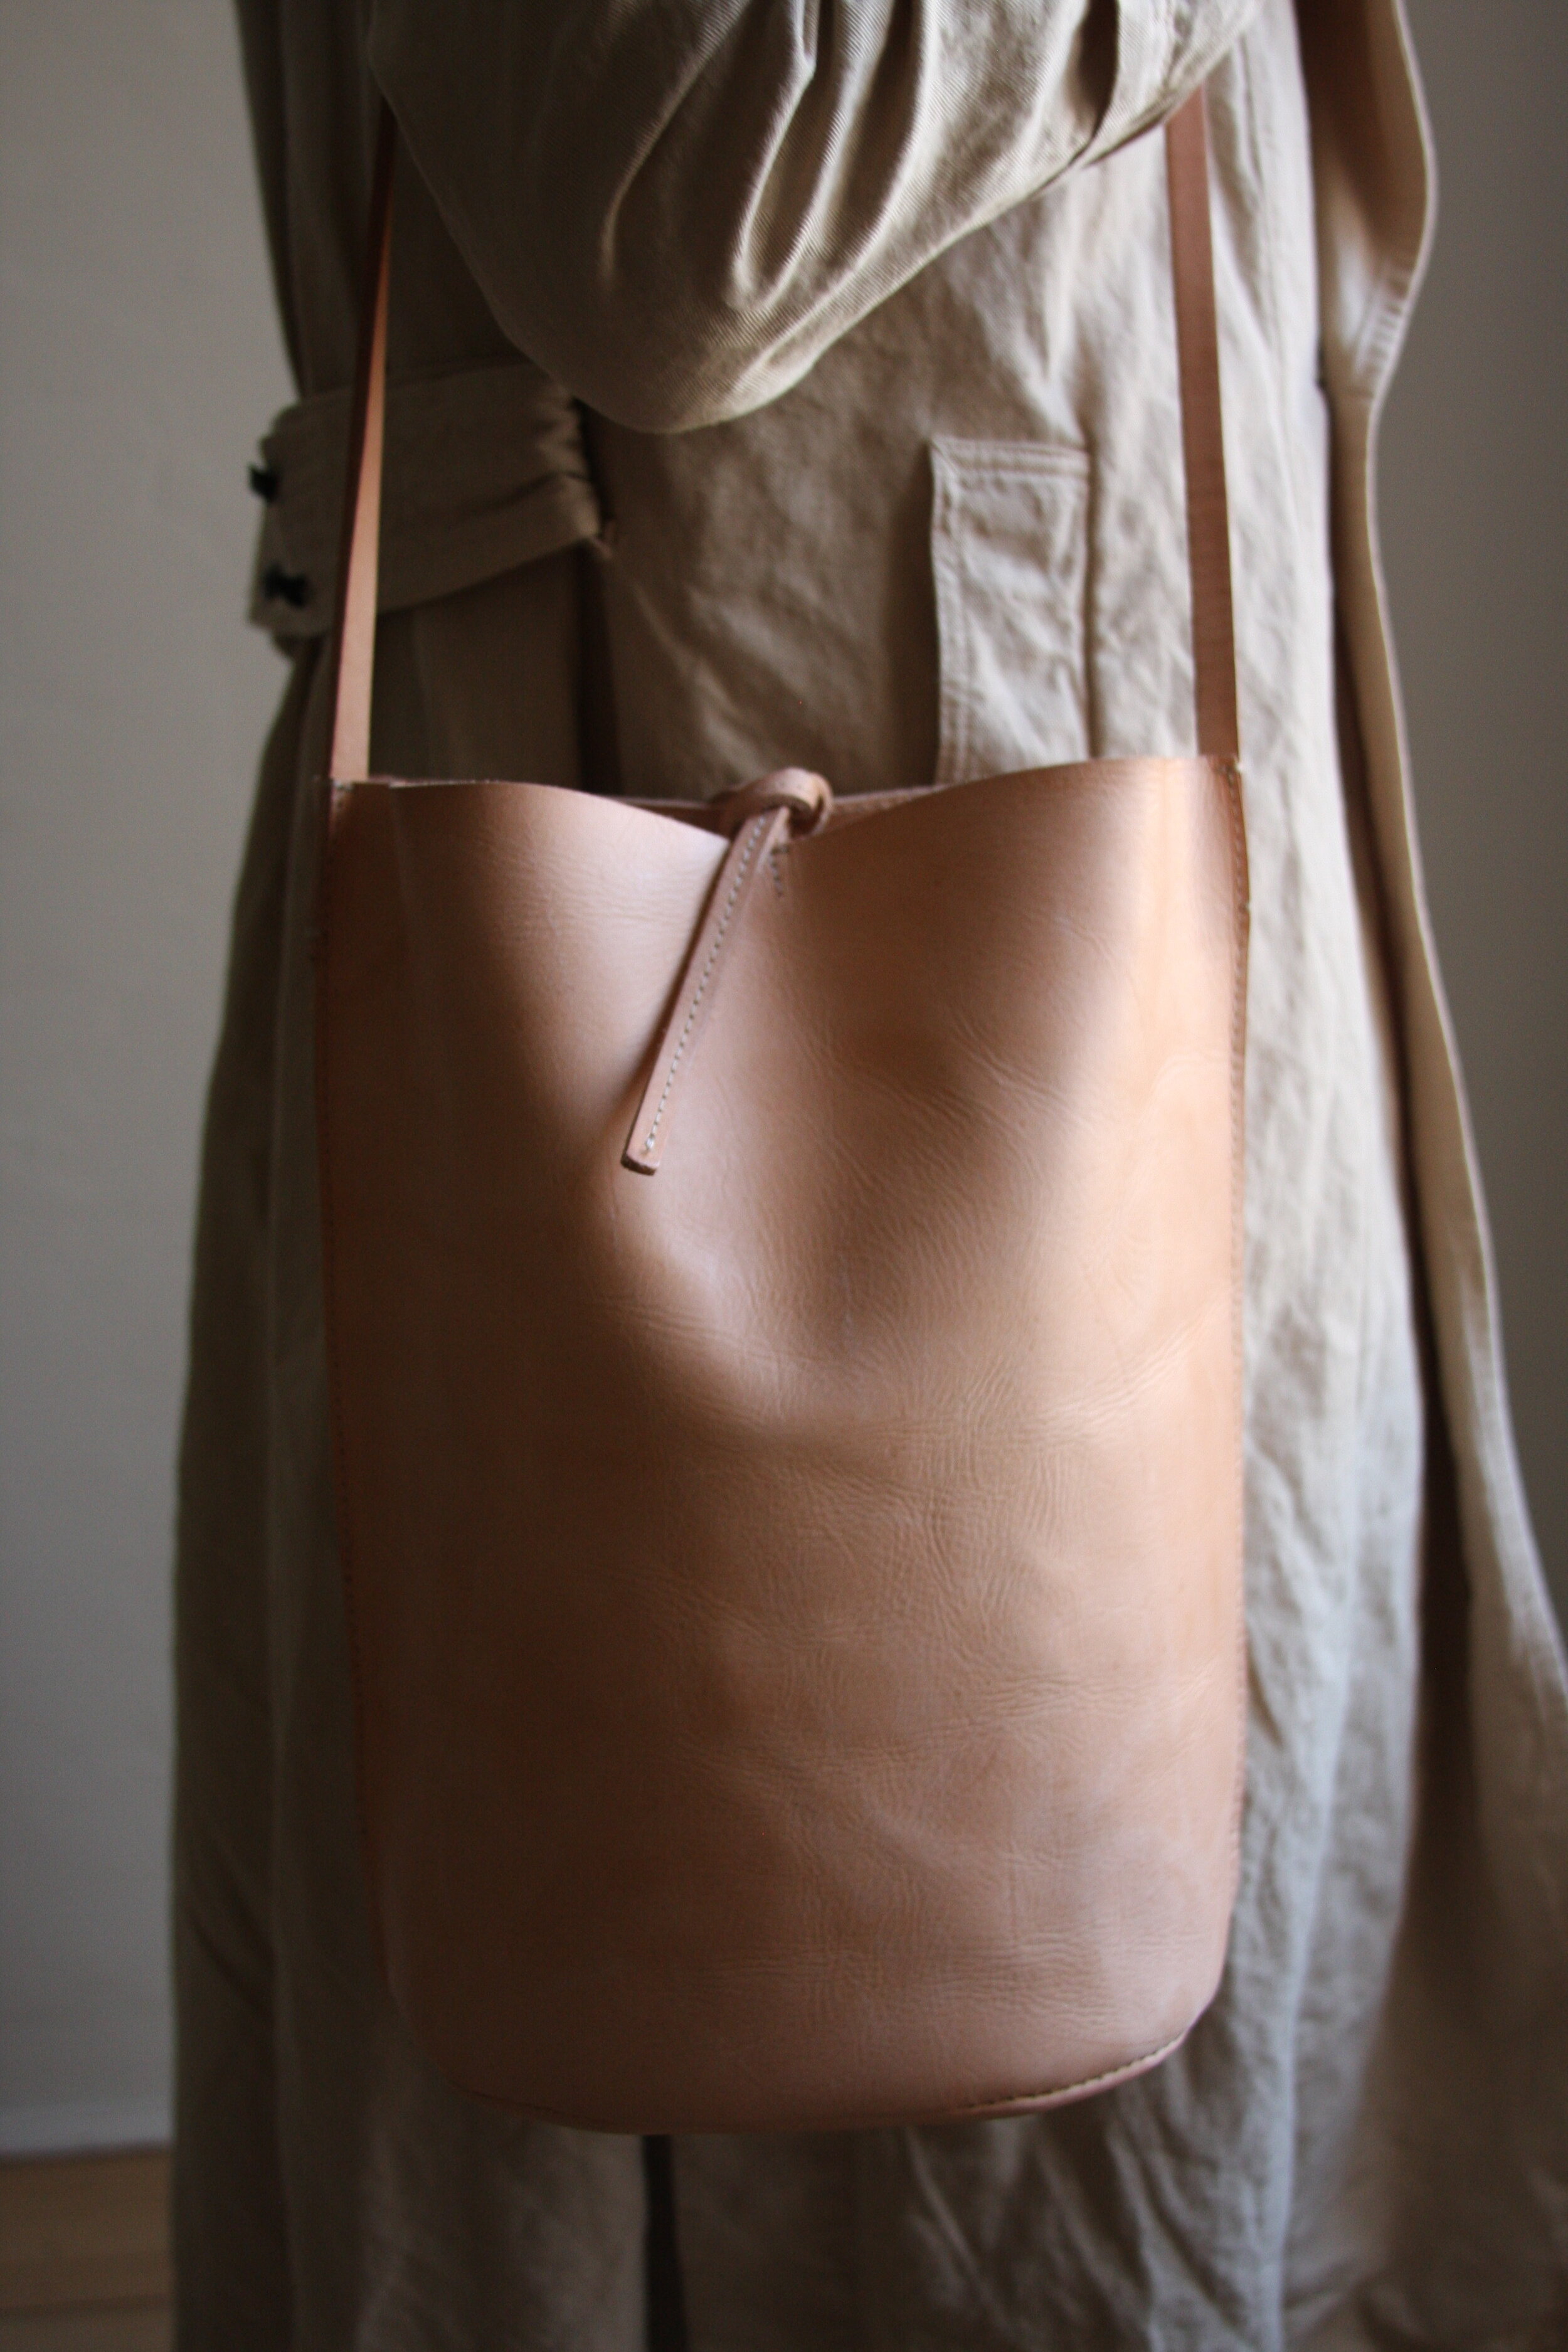 Mansur Gavriel New Apple Leather Bucket Bag Review